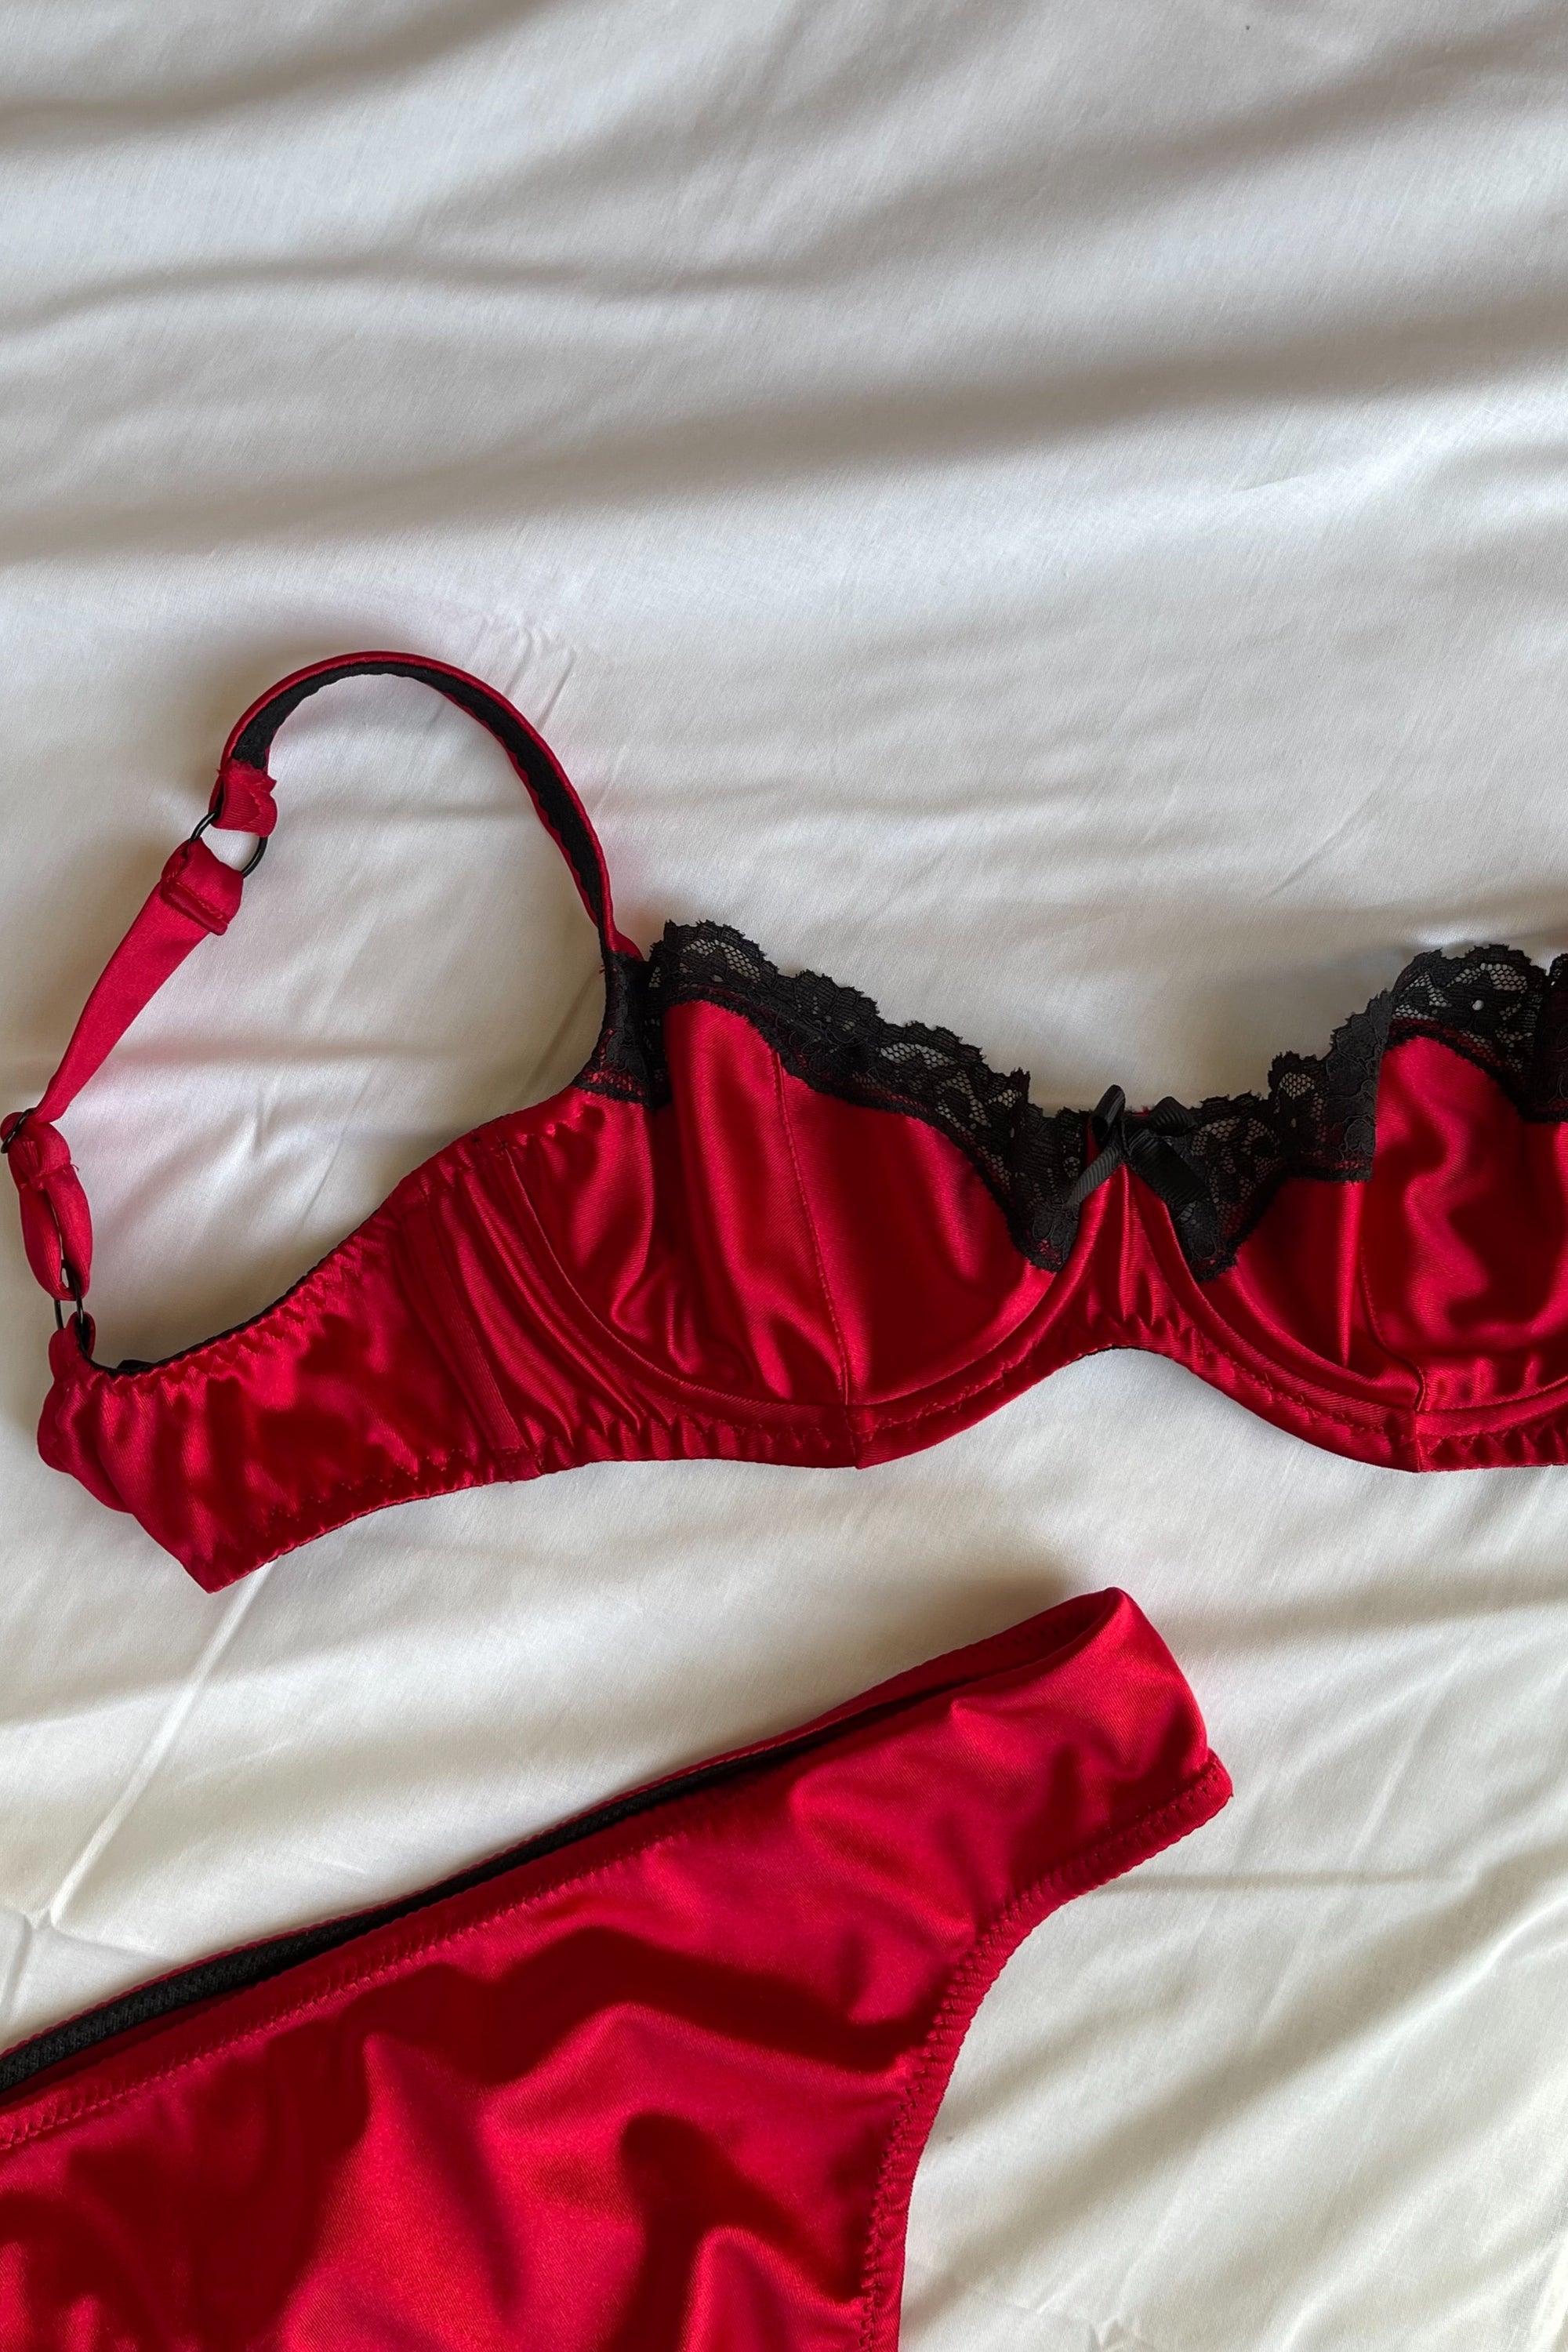 Joli Gloss red-black bra